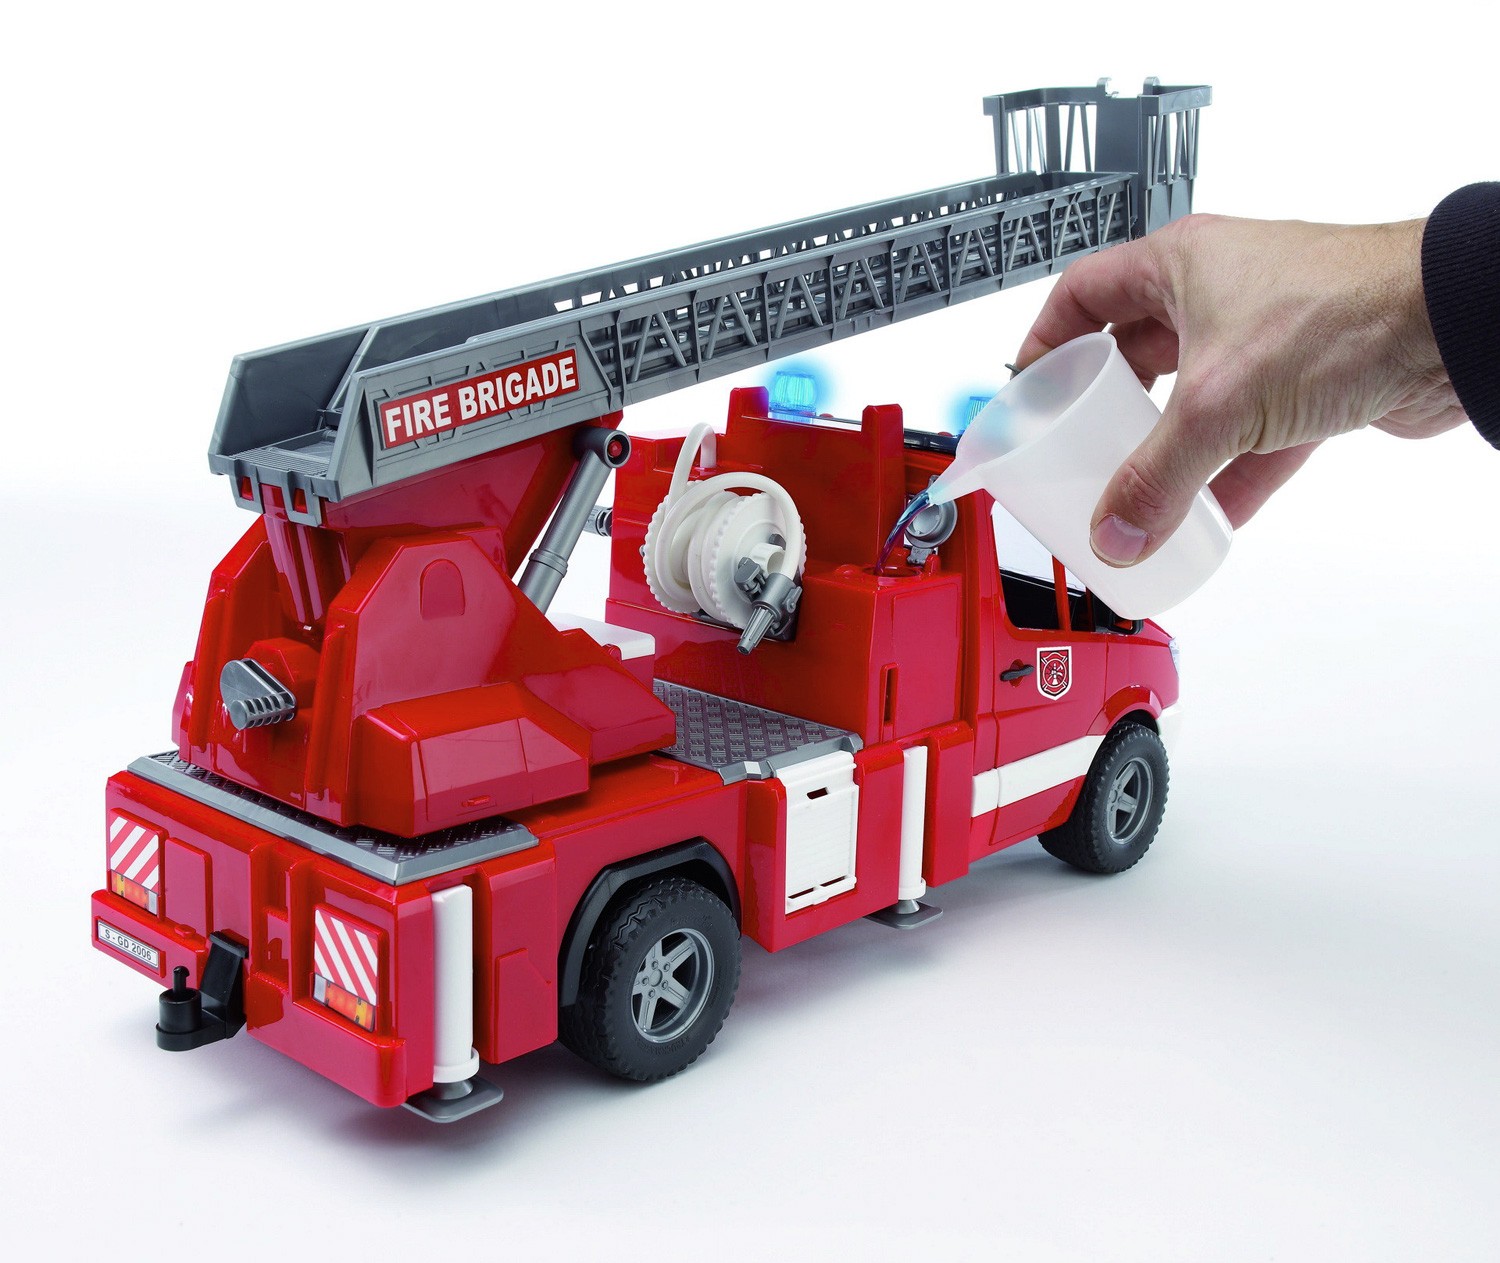 Bruder Mercedes Sprinter - пожарная машина с функцией разбрызгивания воды, свет и звук  